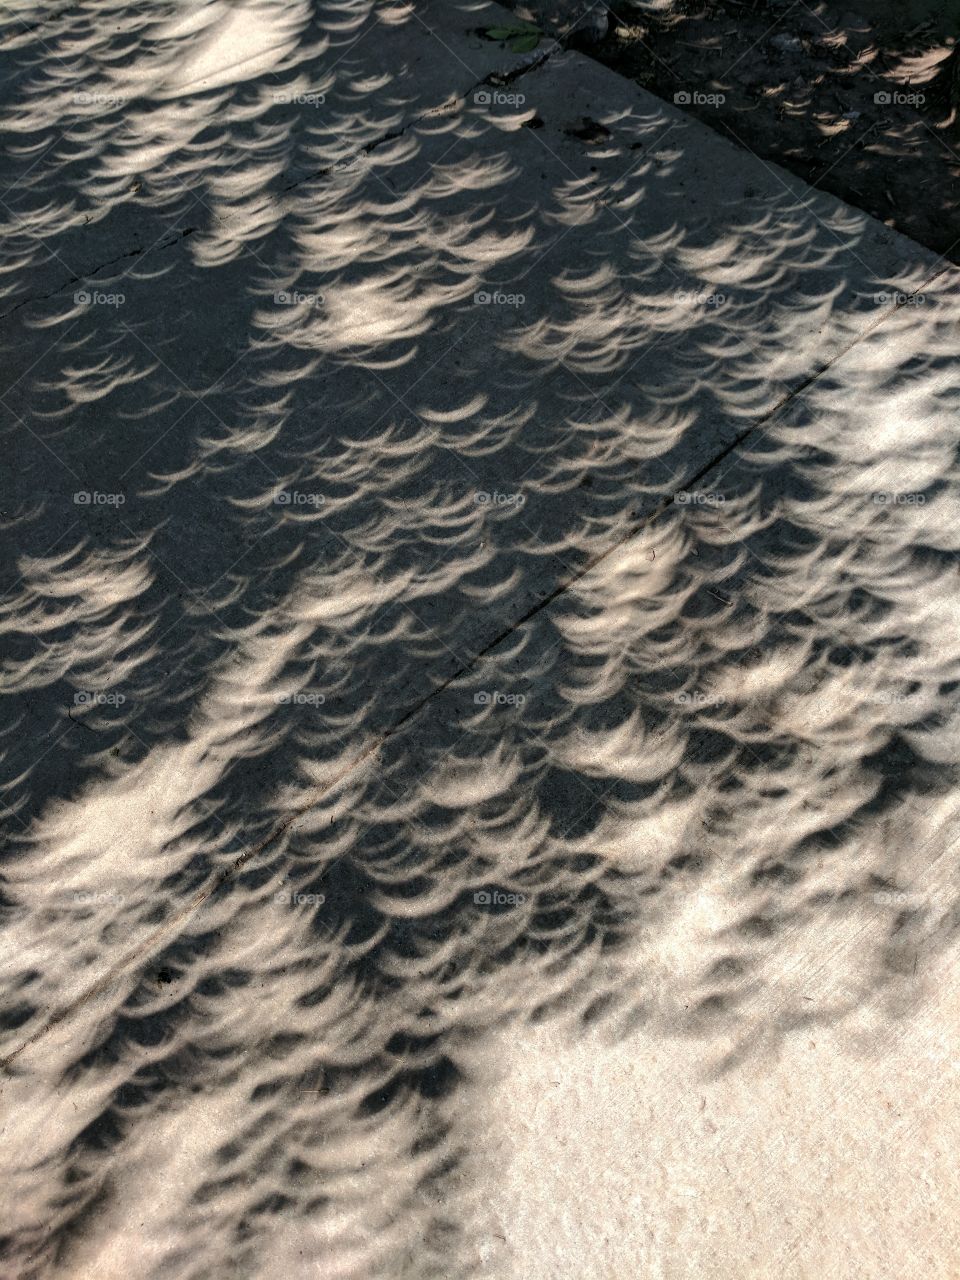 Solar Eclipse shadows